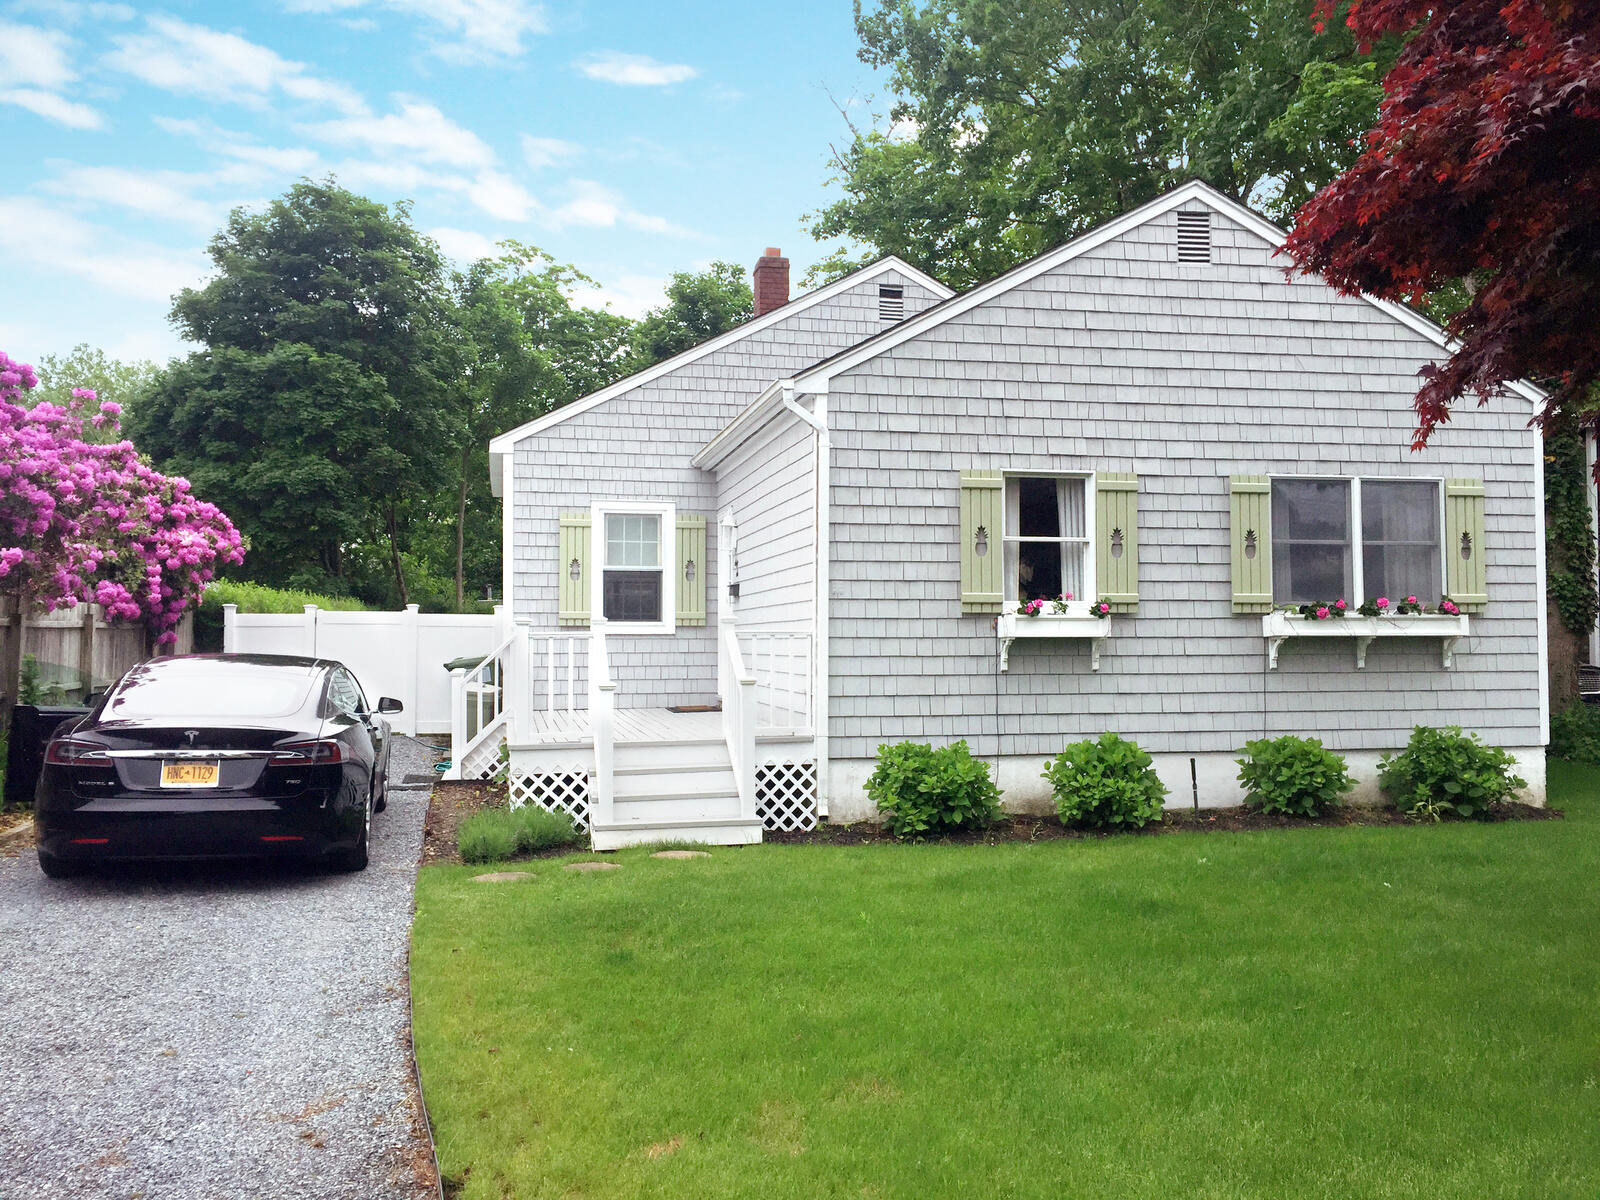 Rental Property at Village Of Southampton, Village Of Southampton, Hamptons, NY - Bedrooms: 2 
Bathrooms: 2  - $40,000 MO.